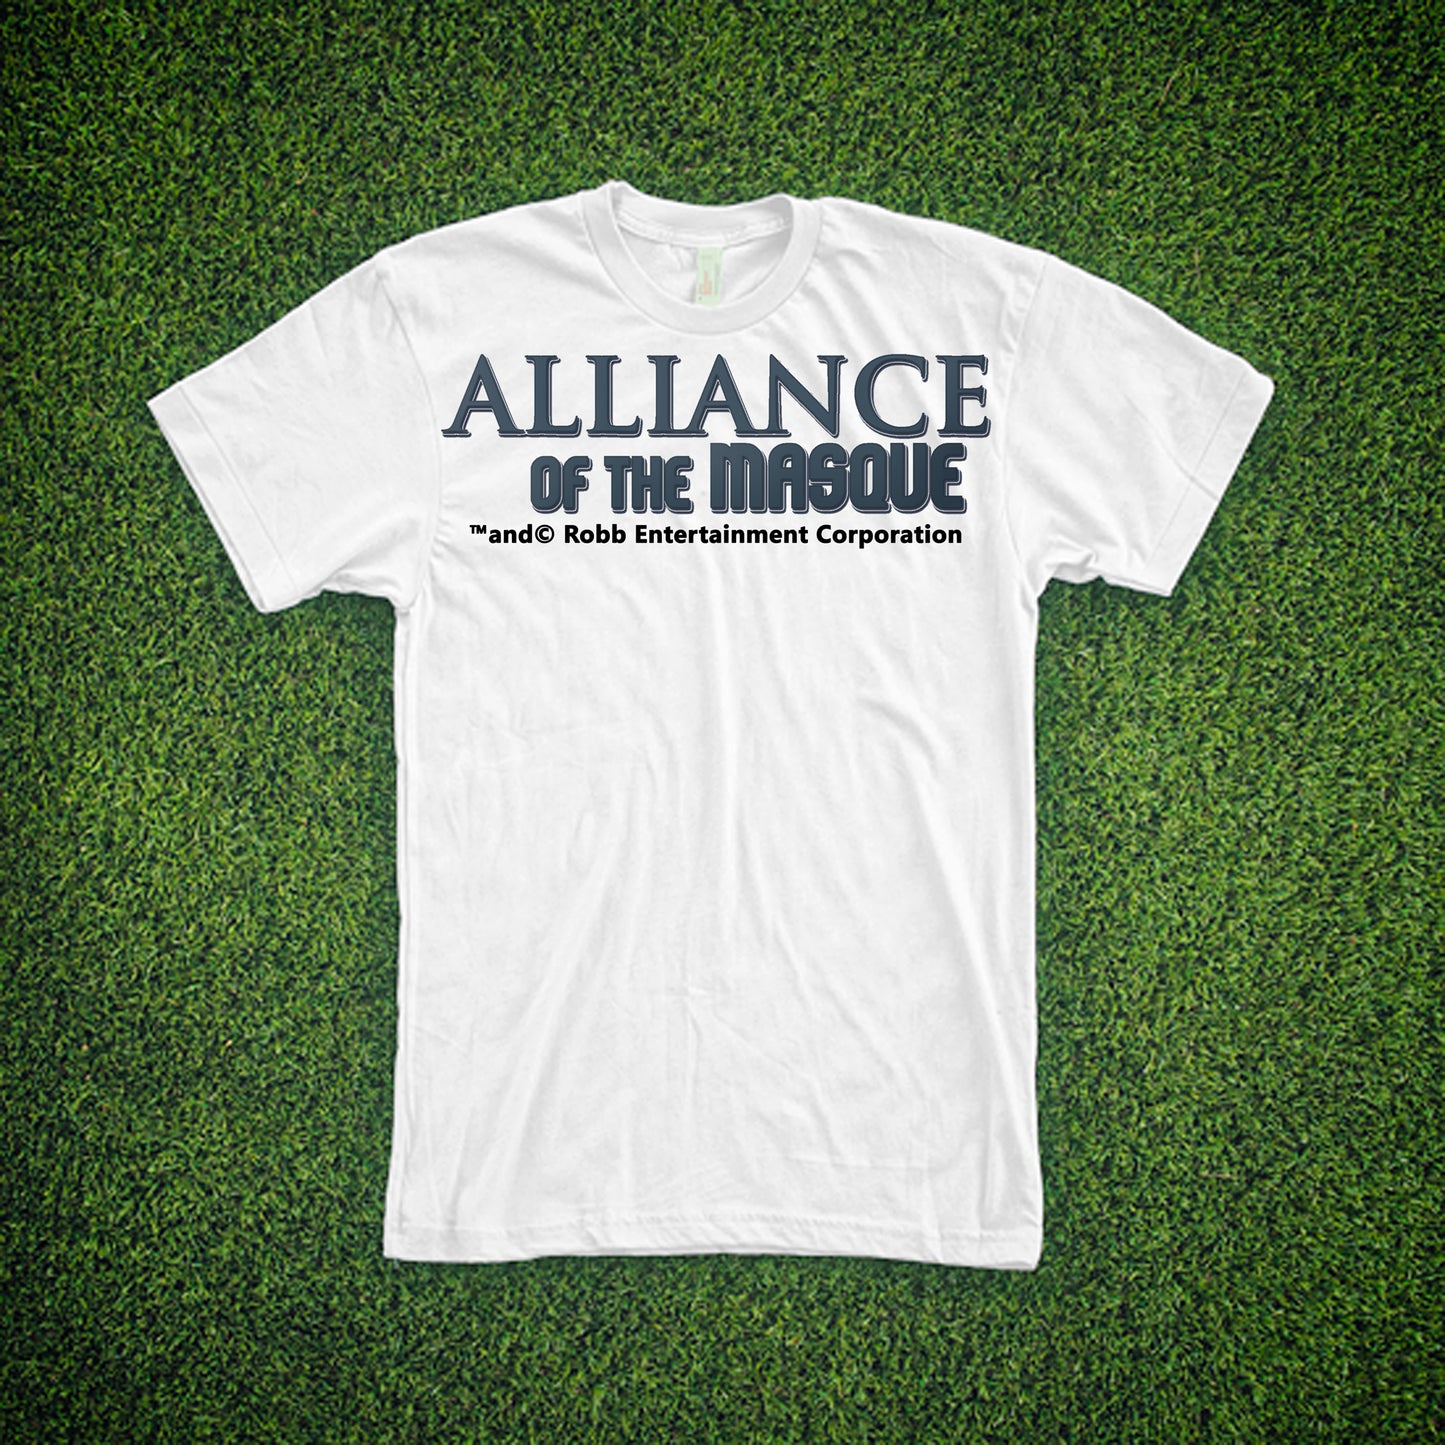 Alliance of the Masque - Logo Shirt (white)